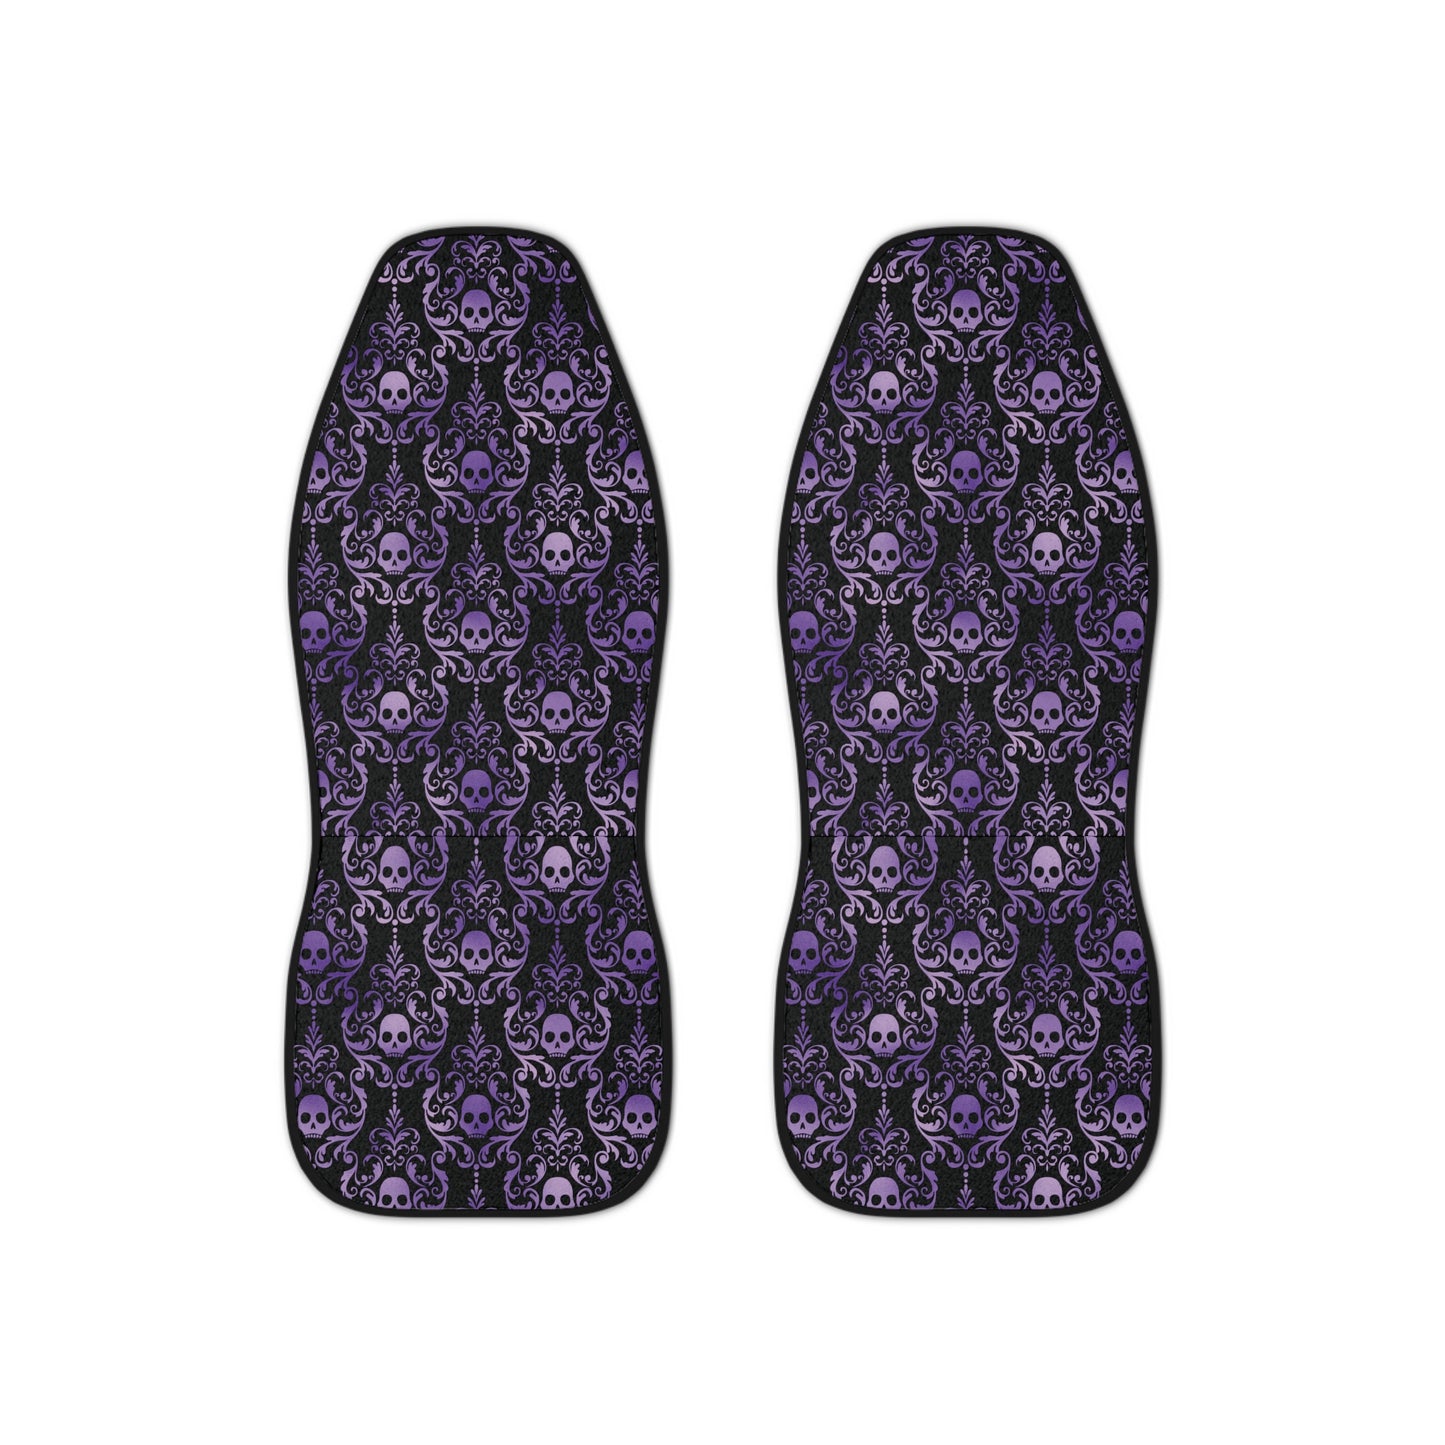 Dark Academia Damask Skull, Victorian Goth Inspired Purple & Black Glam Goth Car Seat Covers